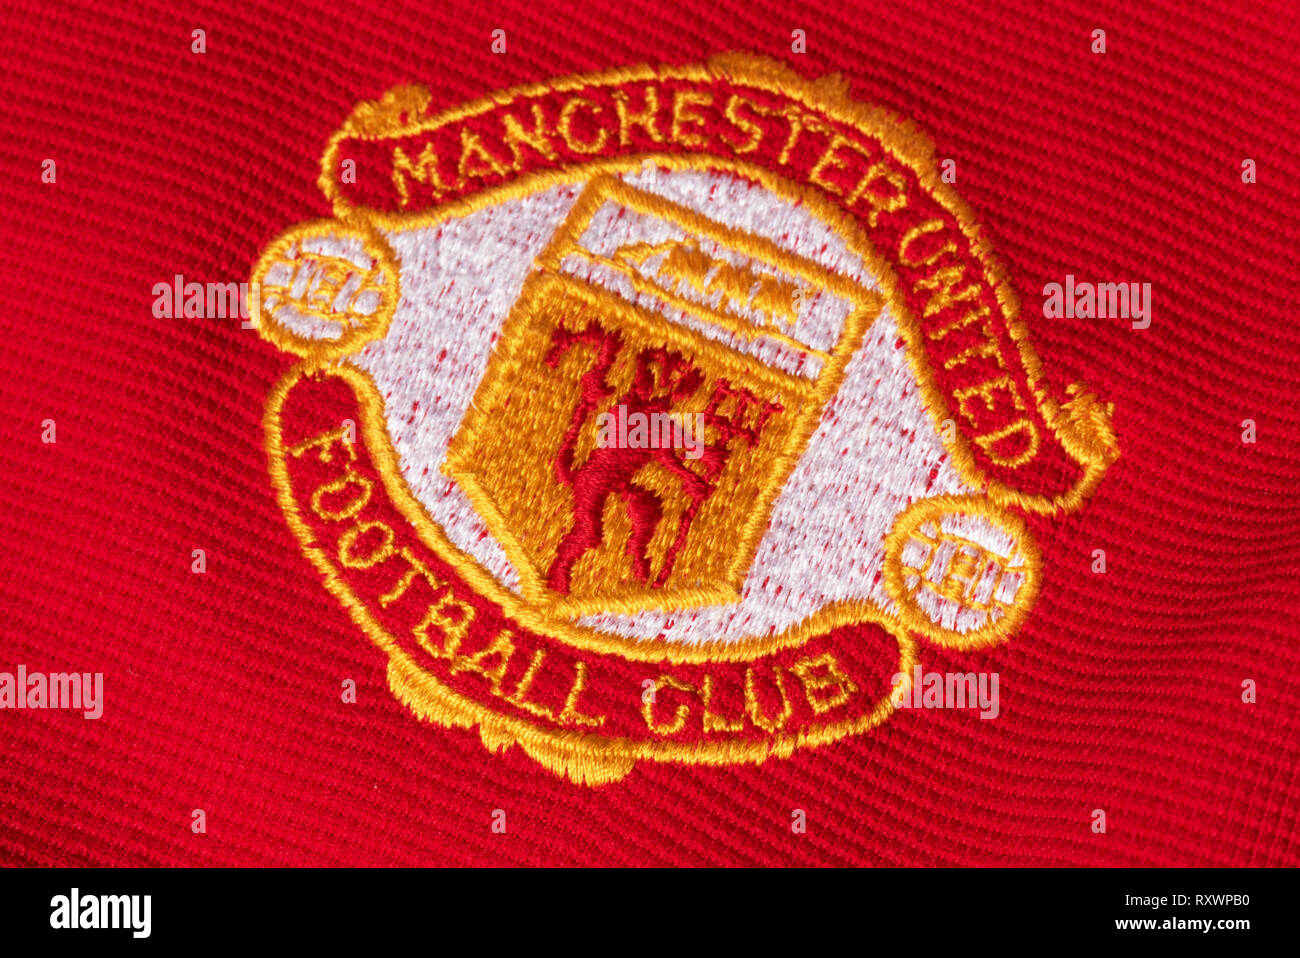 Close up di un retrò Manchester United Jersey. Foto Stock